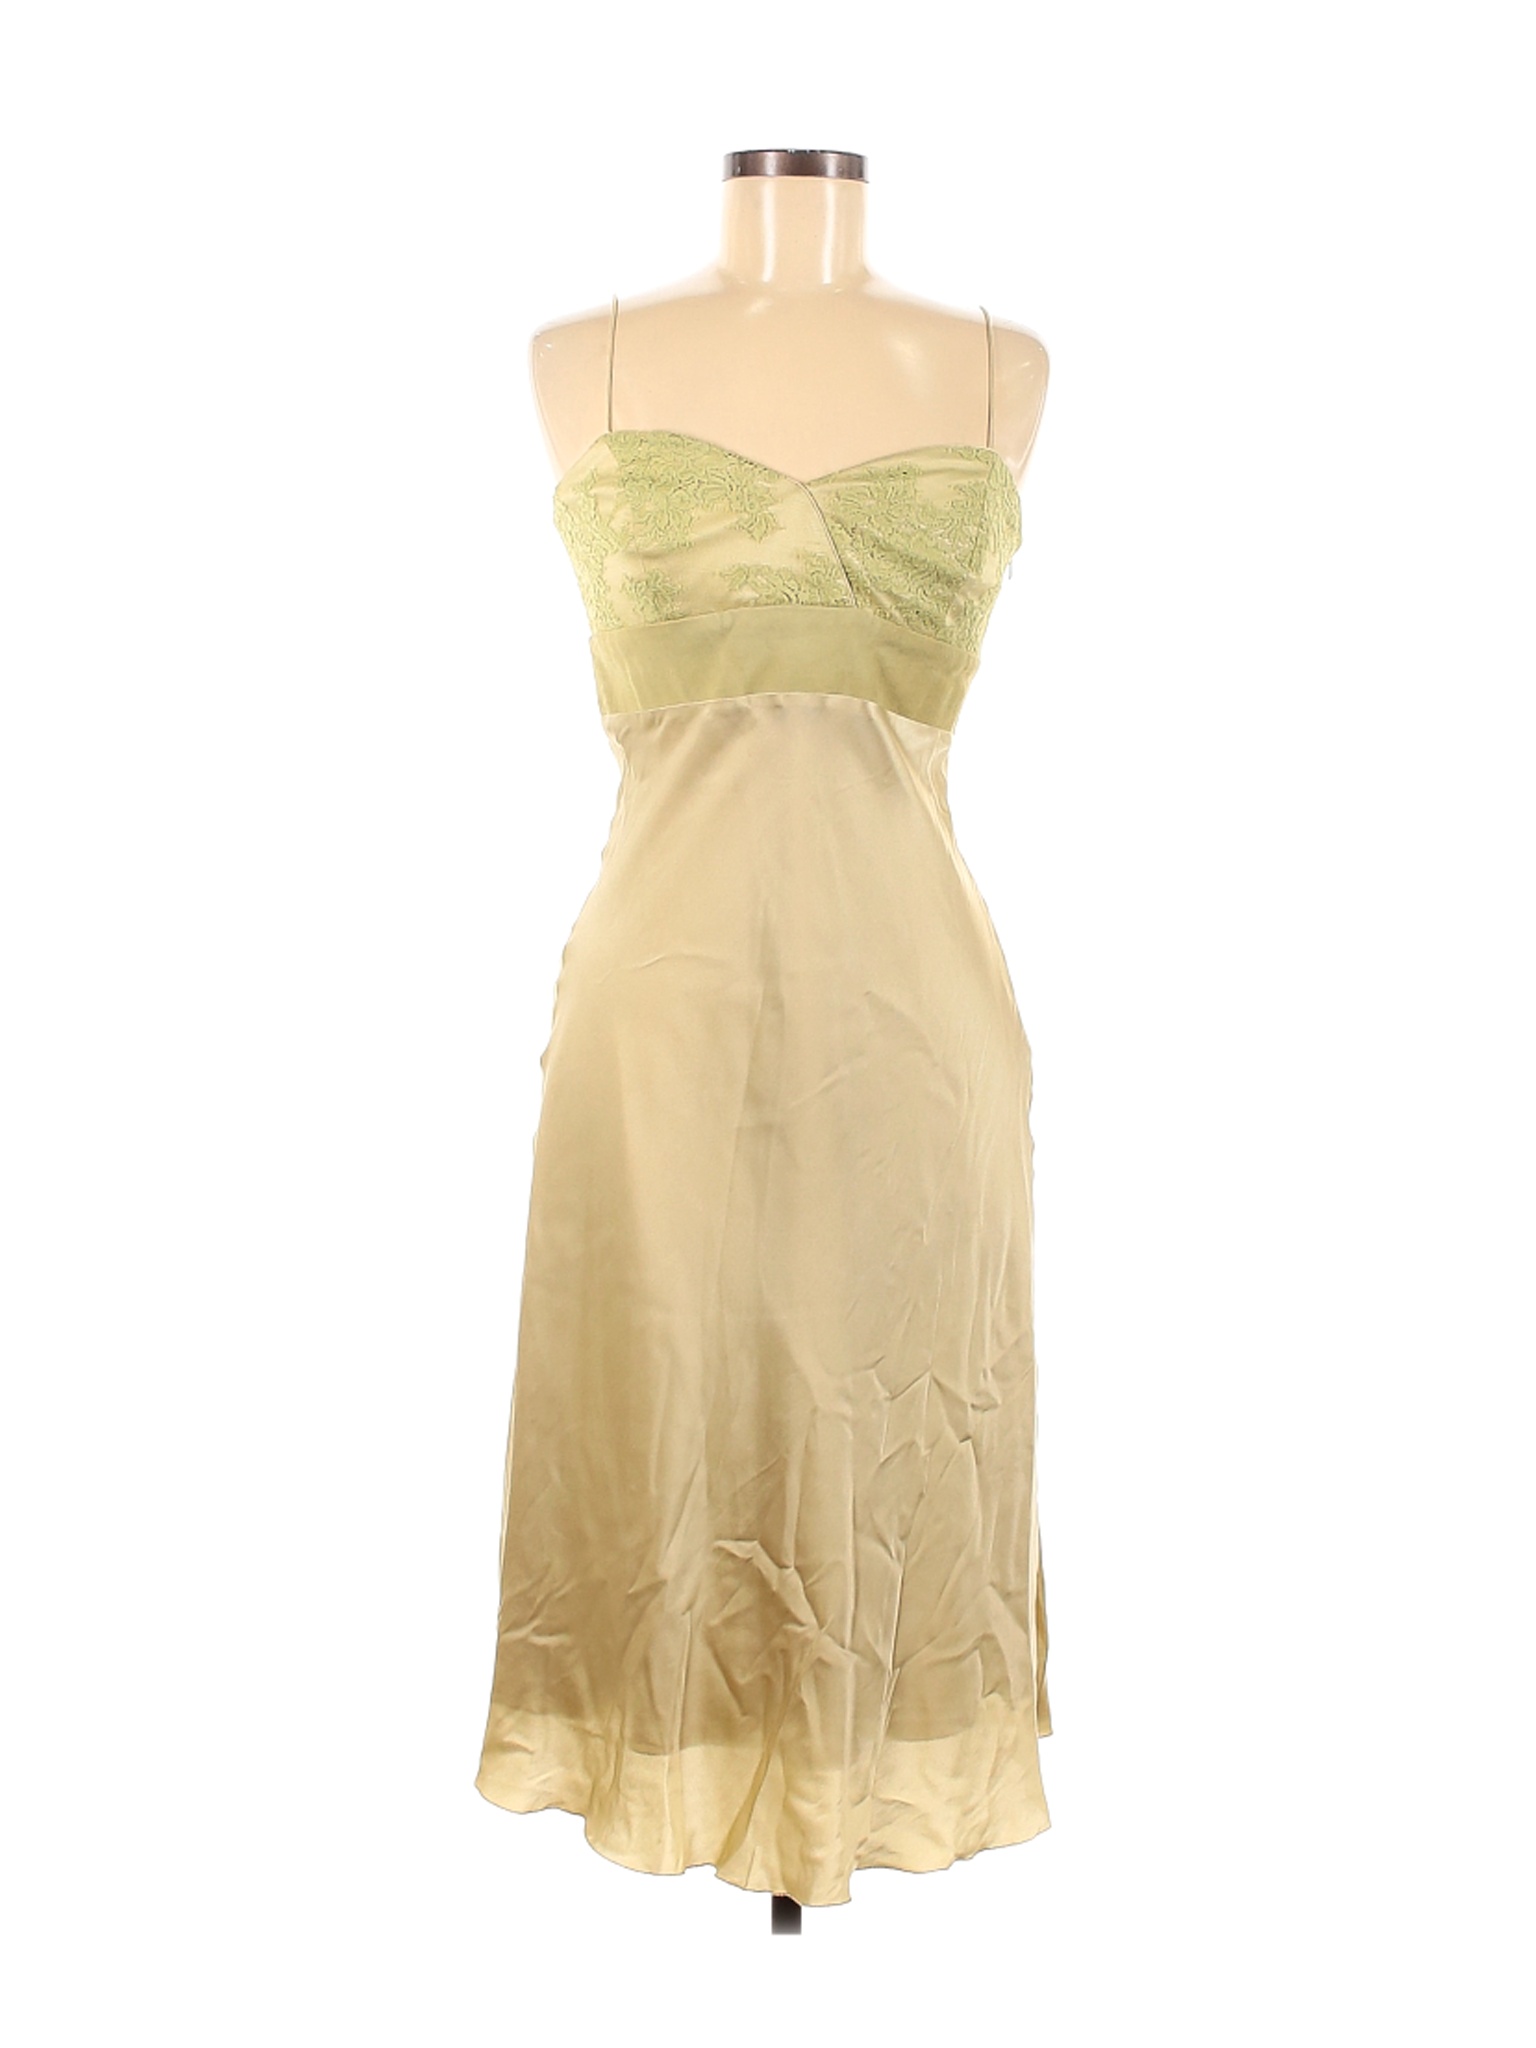 Nicole Miller Collection Women Green Cocktail Dress 6 | eBay